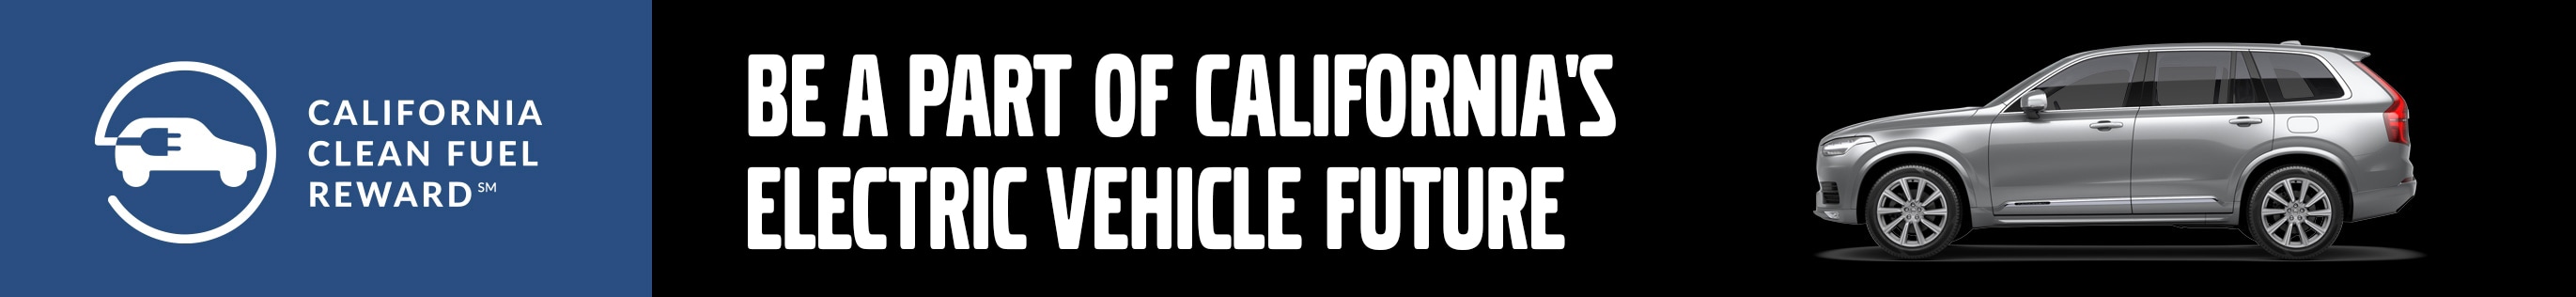 california-clean-fuel-reward-rusnak-volvo-cars